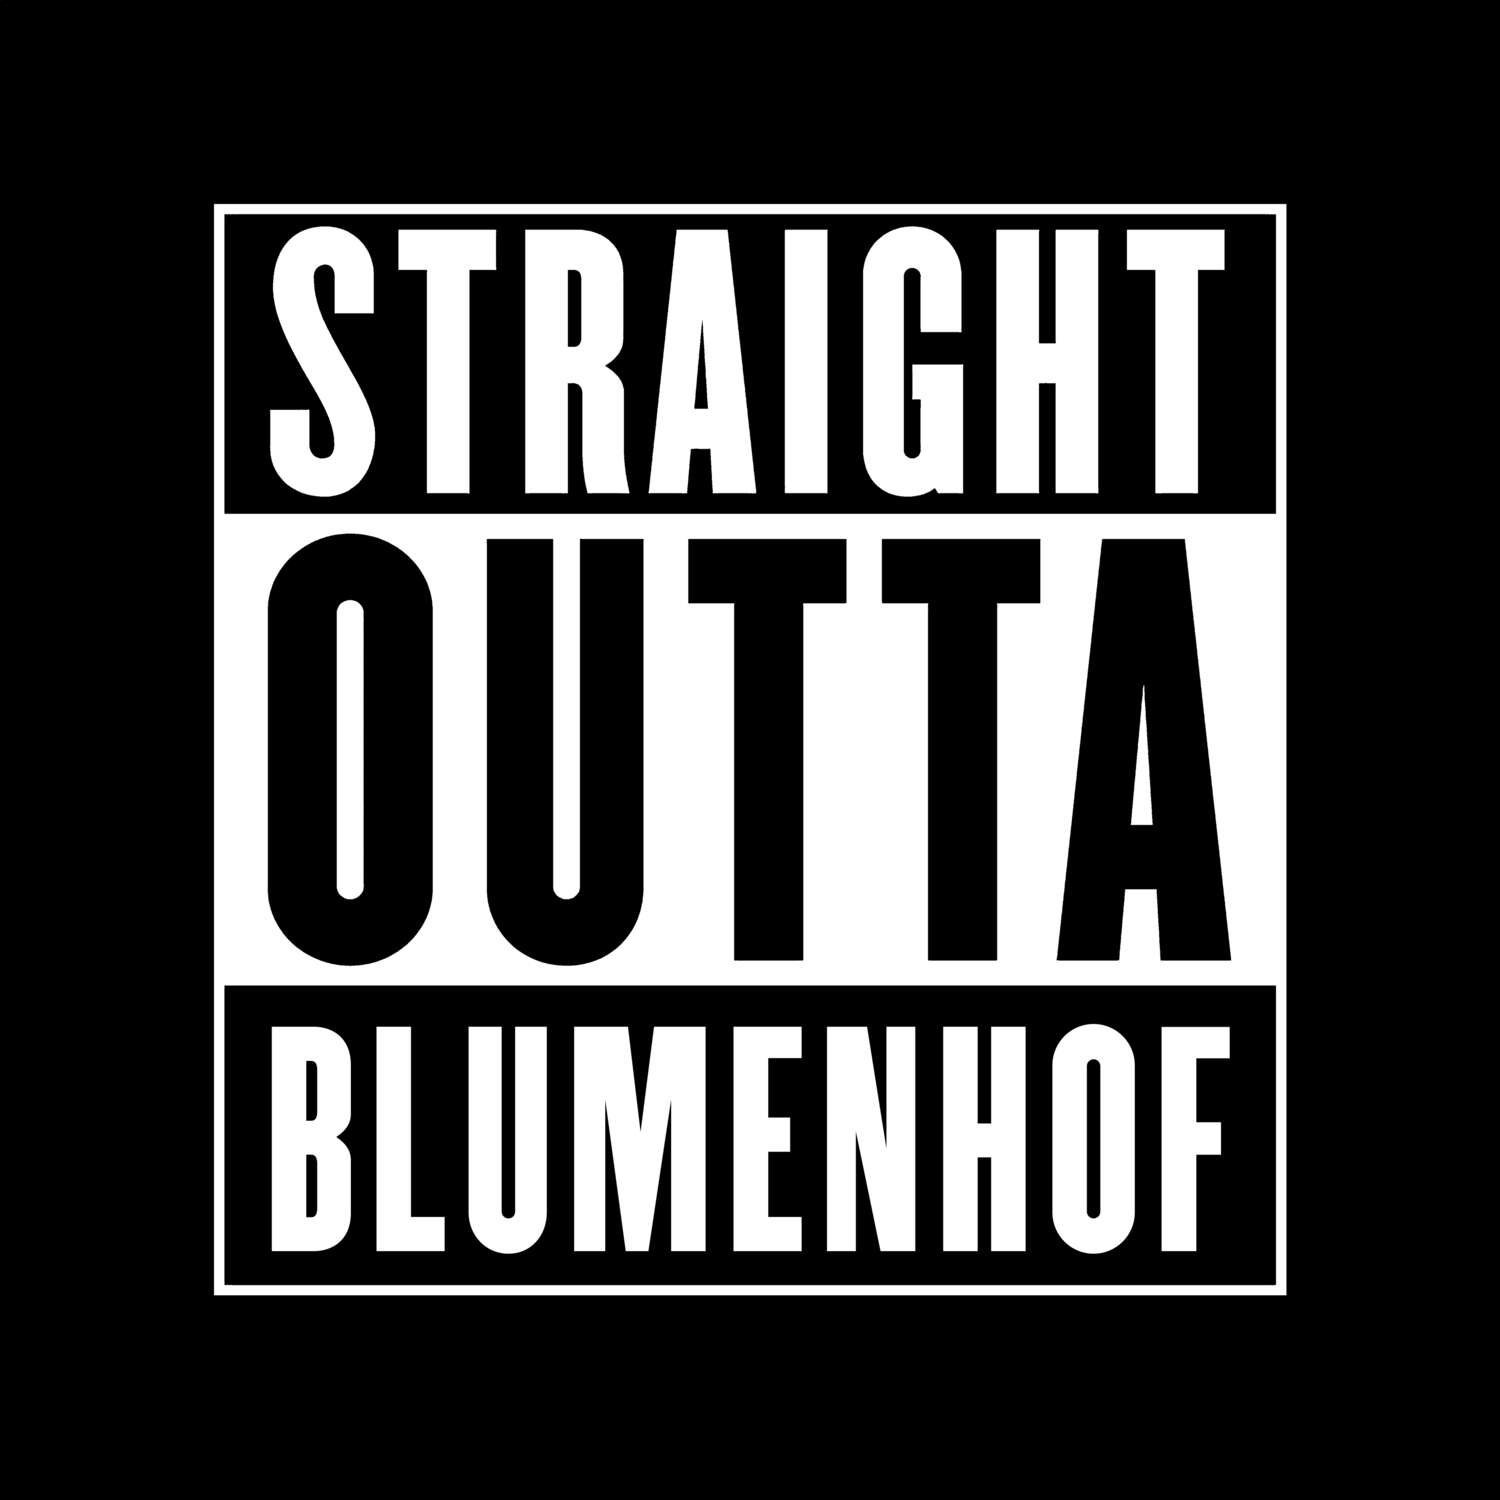 Blumenhof T-Shirt »Straight Outta«